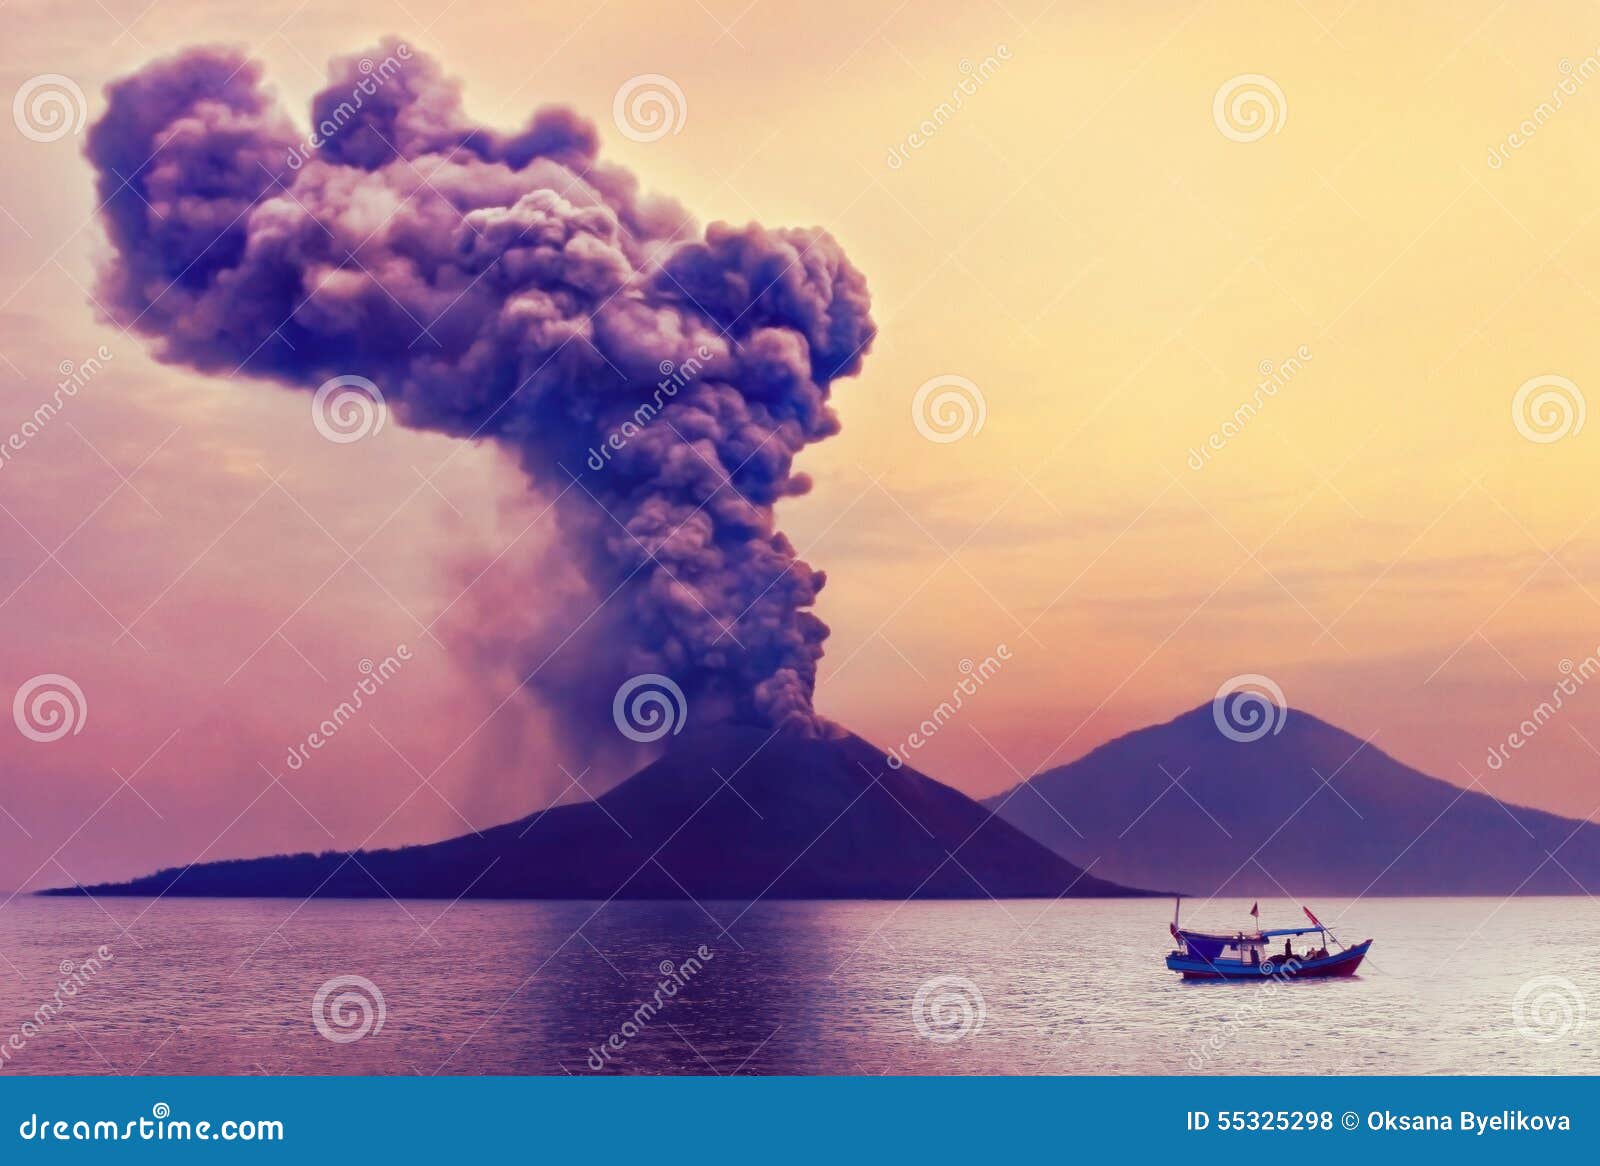 volcano eruption.